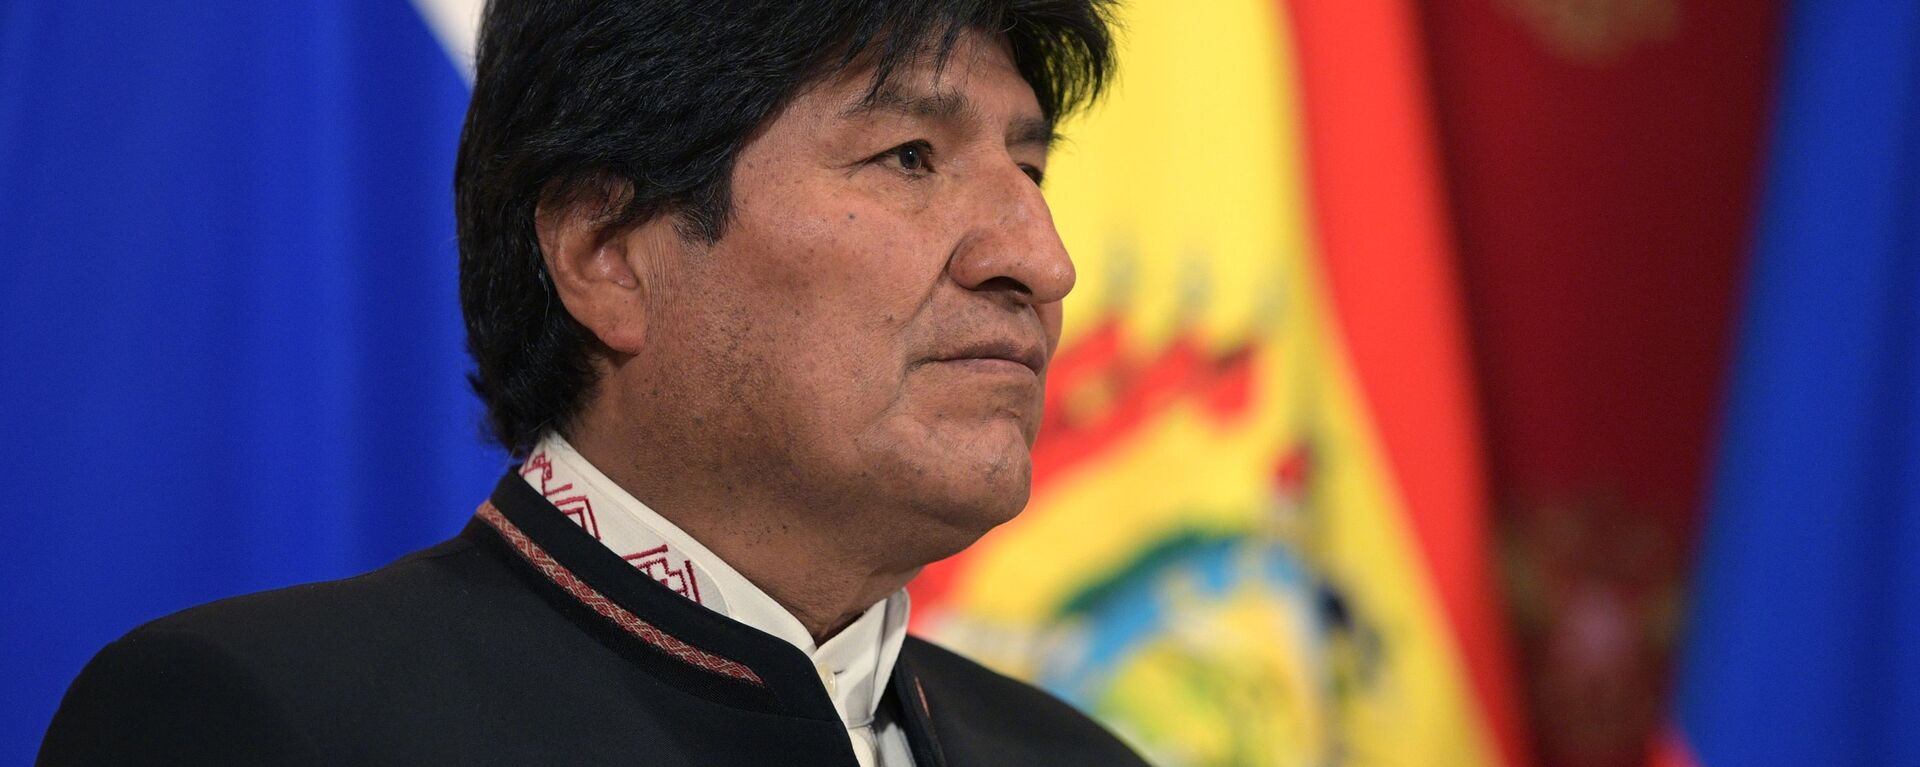 Evo Morales, presidente de Bolivia - Sputnik Mundo, 1920, 11.11.2019